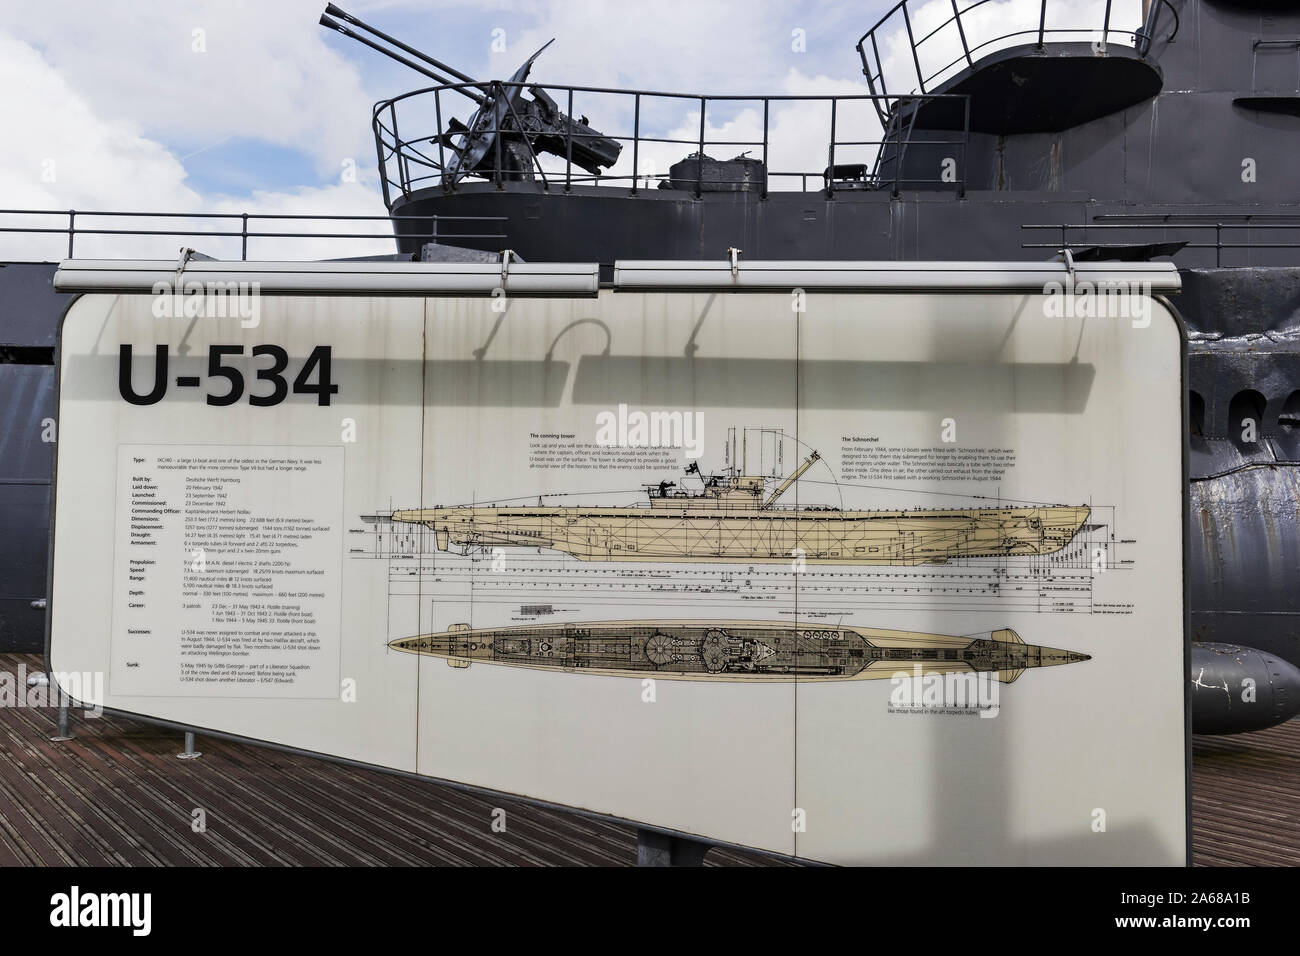 U boat U-534 at the U boat museum, Liverpool, UK Stock Photo